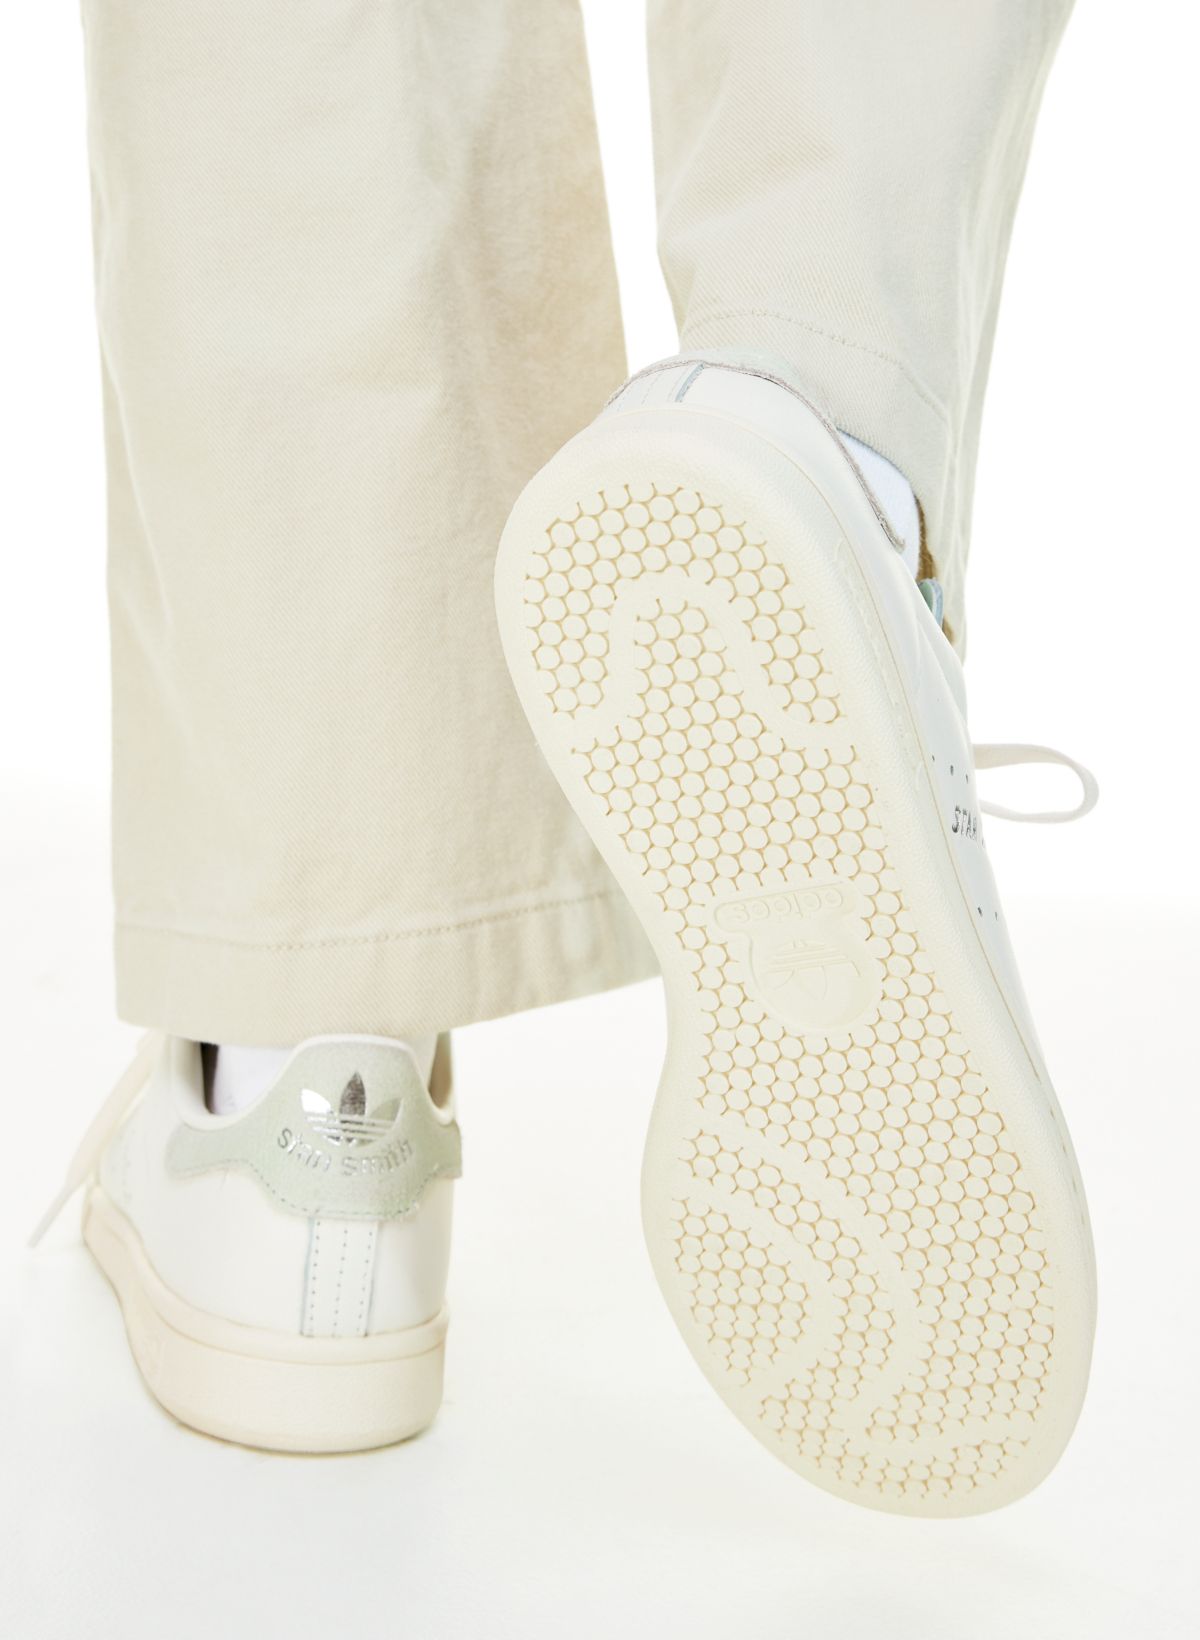 adidas Originals Stan Smith 'Leather Sock' Pack (KICKS)